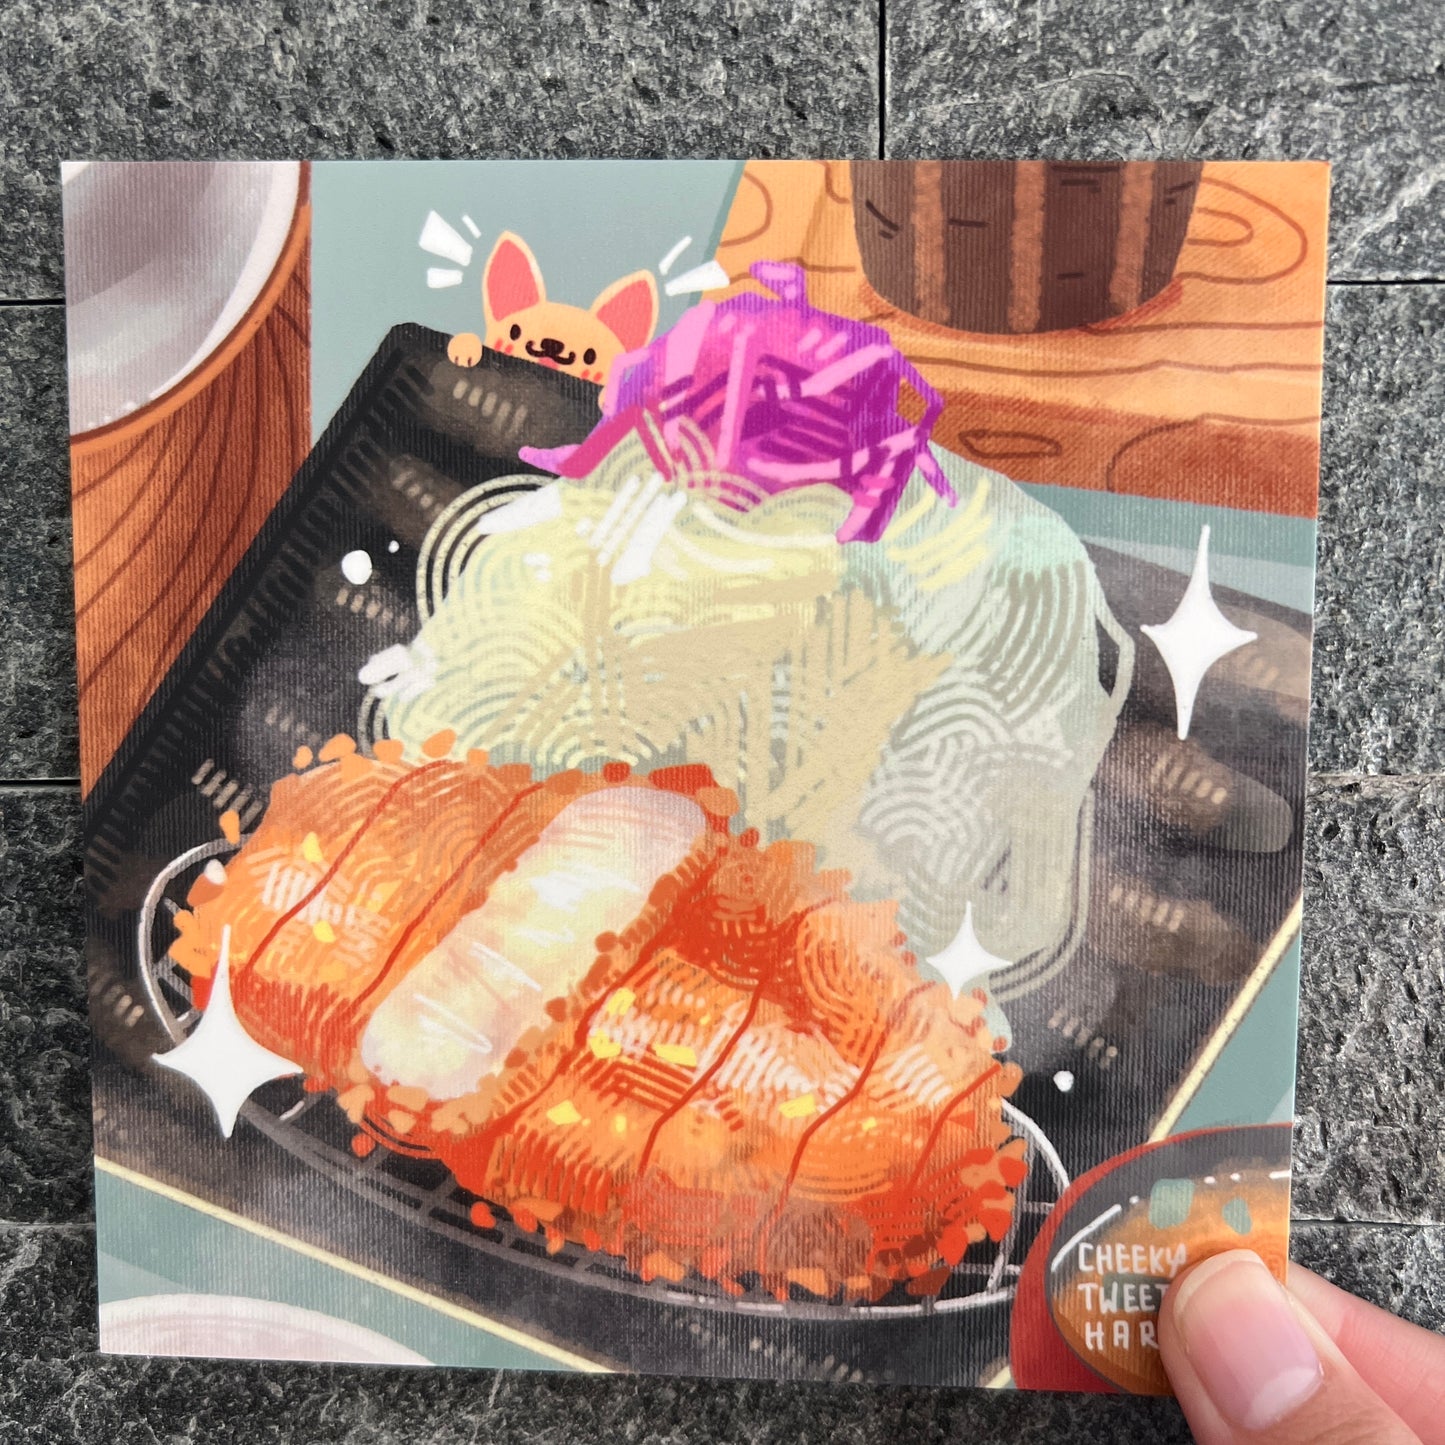 Tonkatsu Set Meal Princess Dog Art Prints - Patreon Limited Edition 23 Jul #AP1025